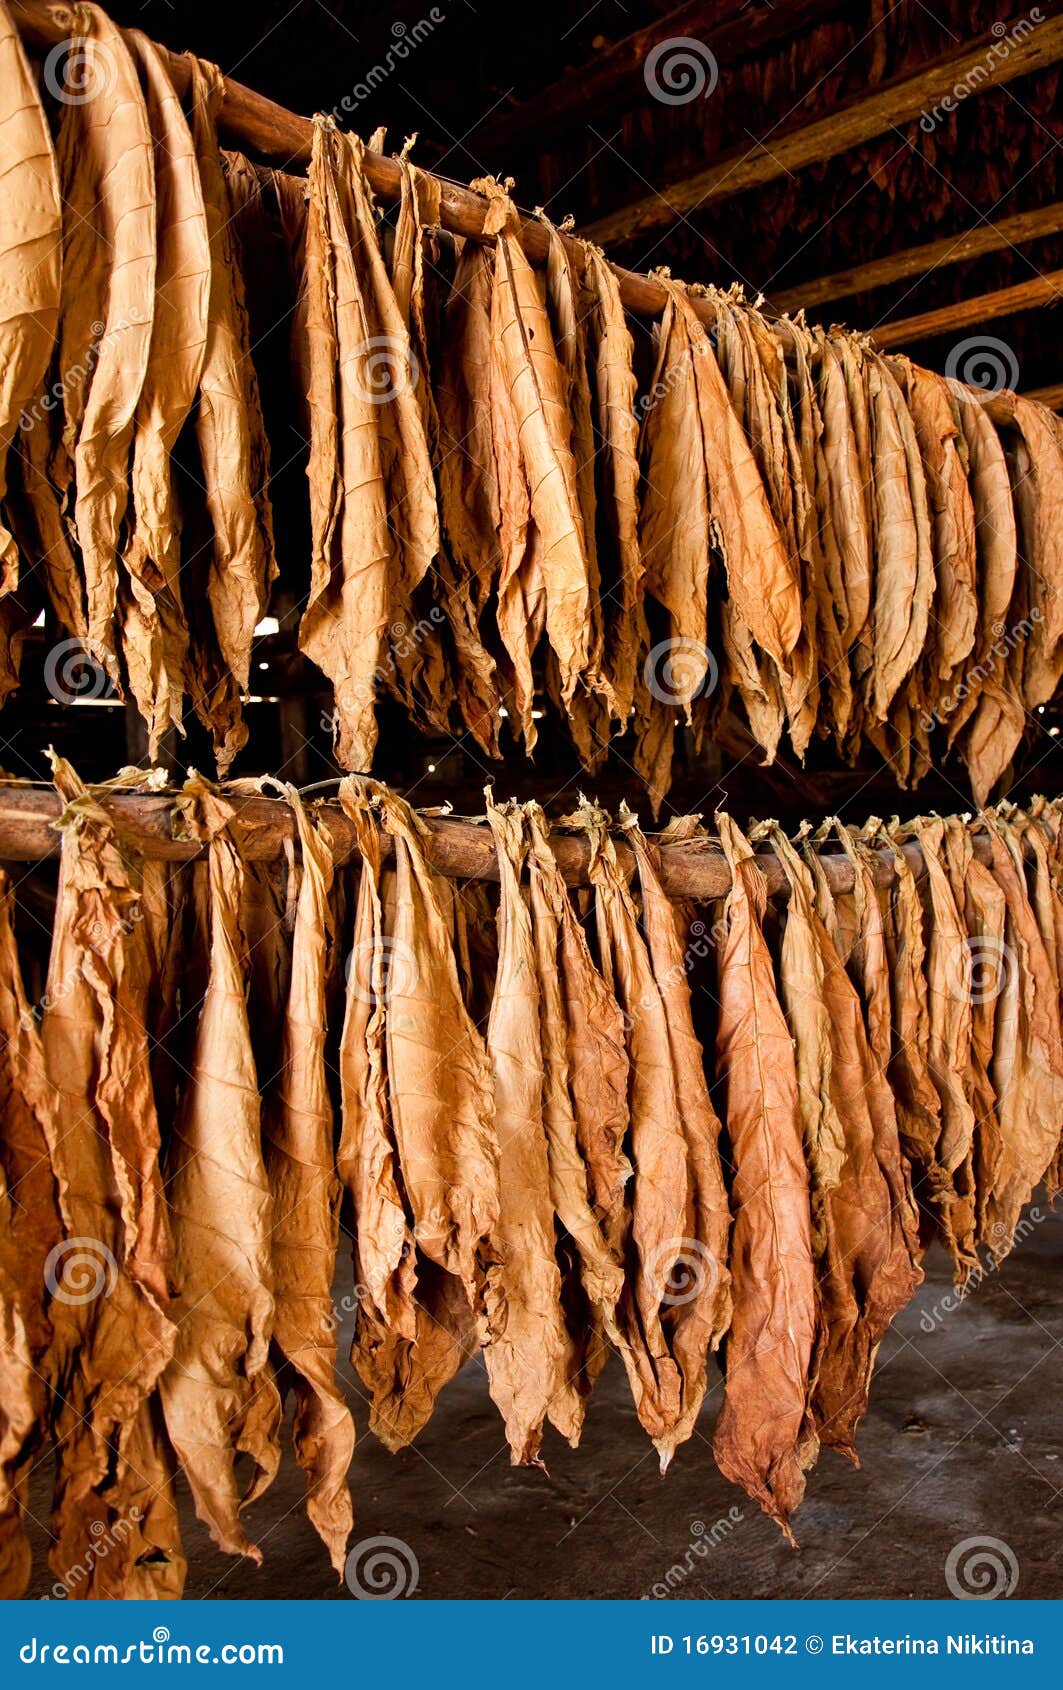 Dried tobacco leaves stock photo. Image of cuba, prepare - 16931042